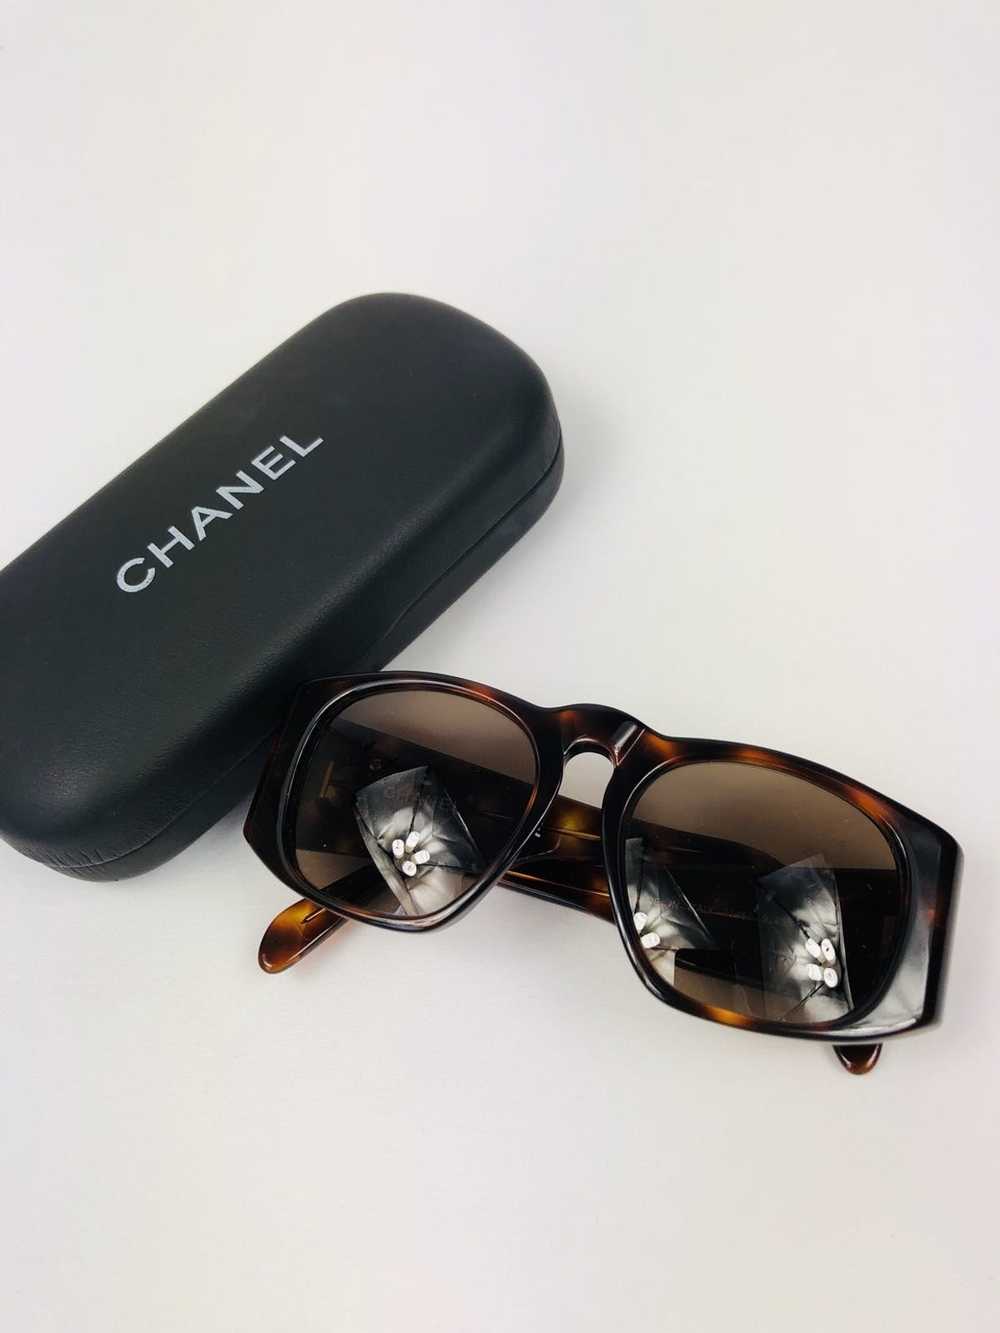 Chanel Chanel cc logo sunglasses - image 1